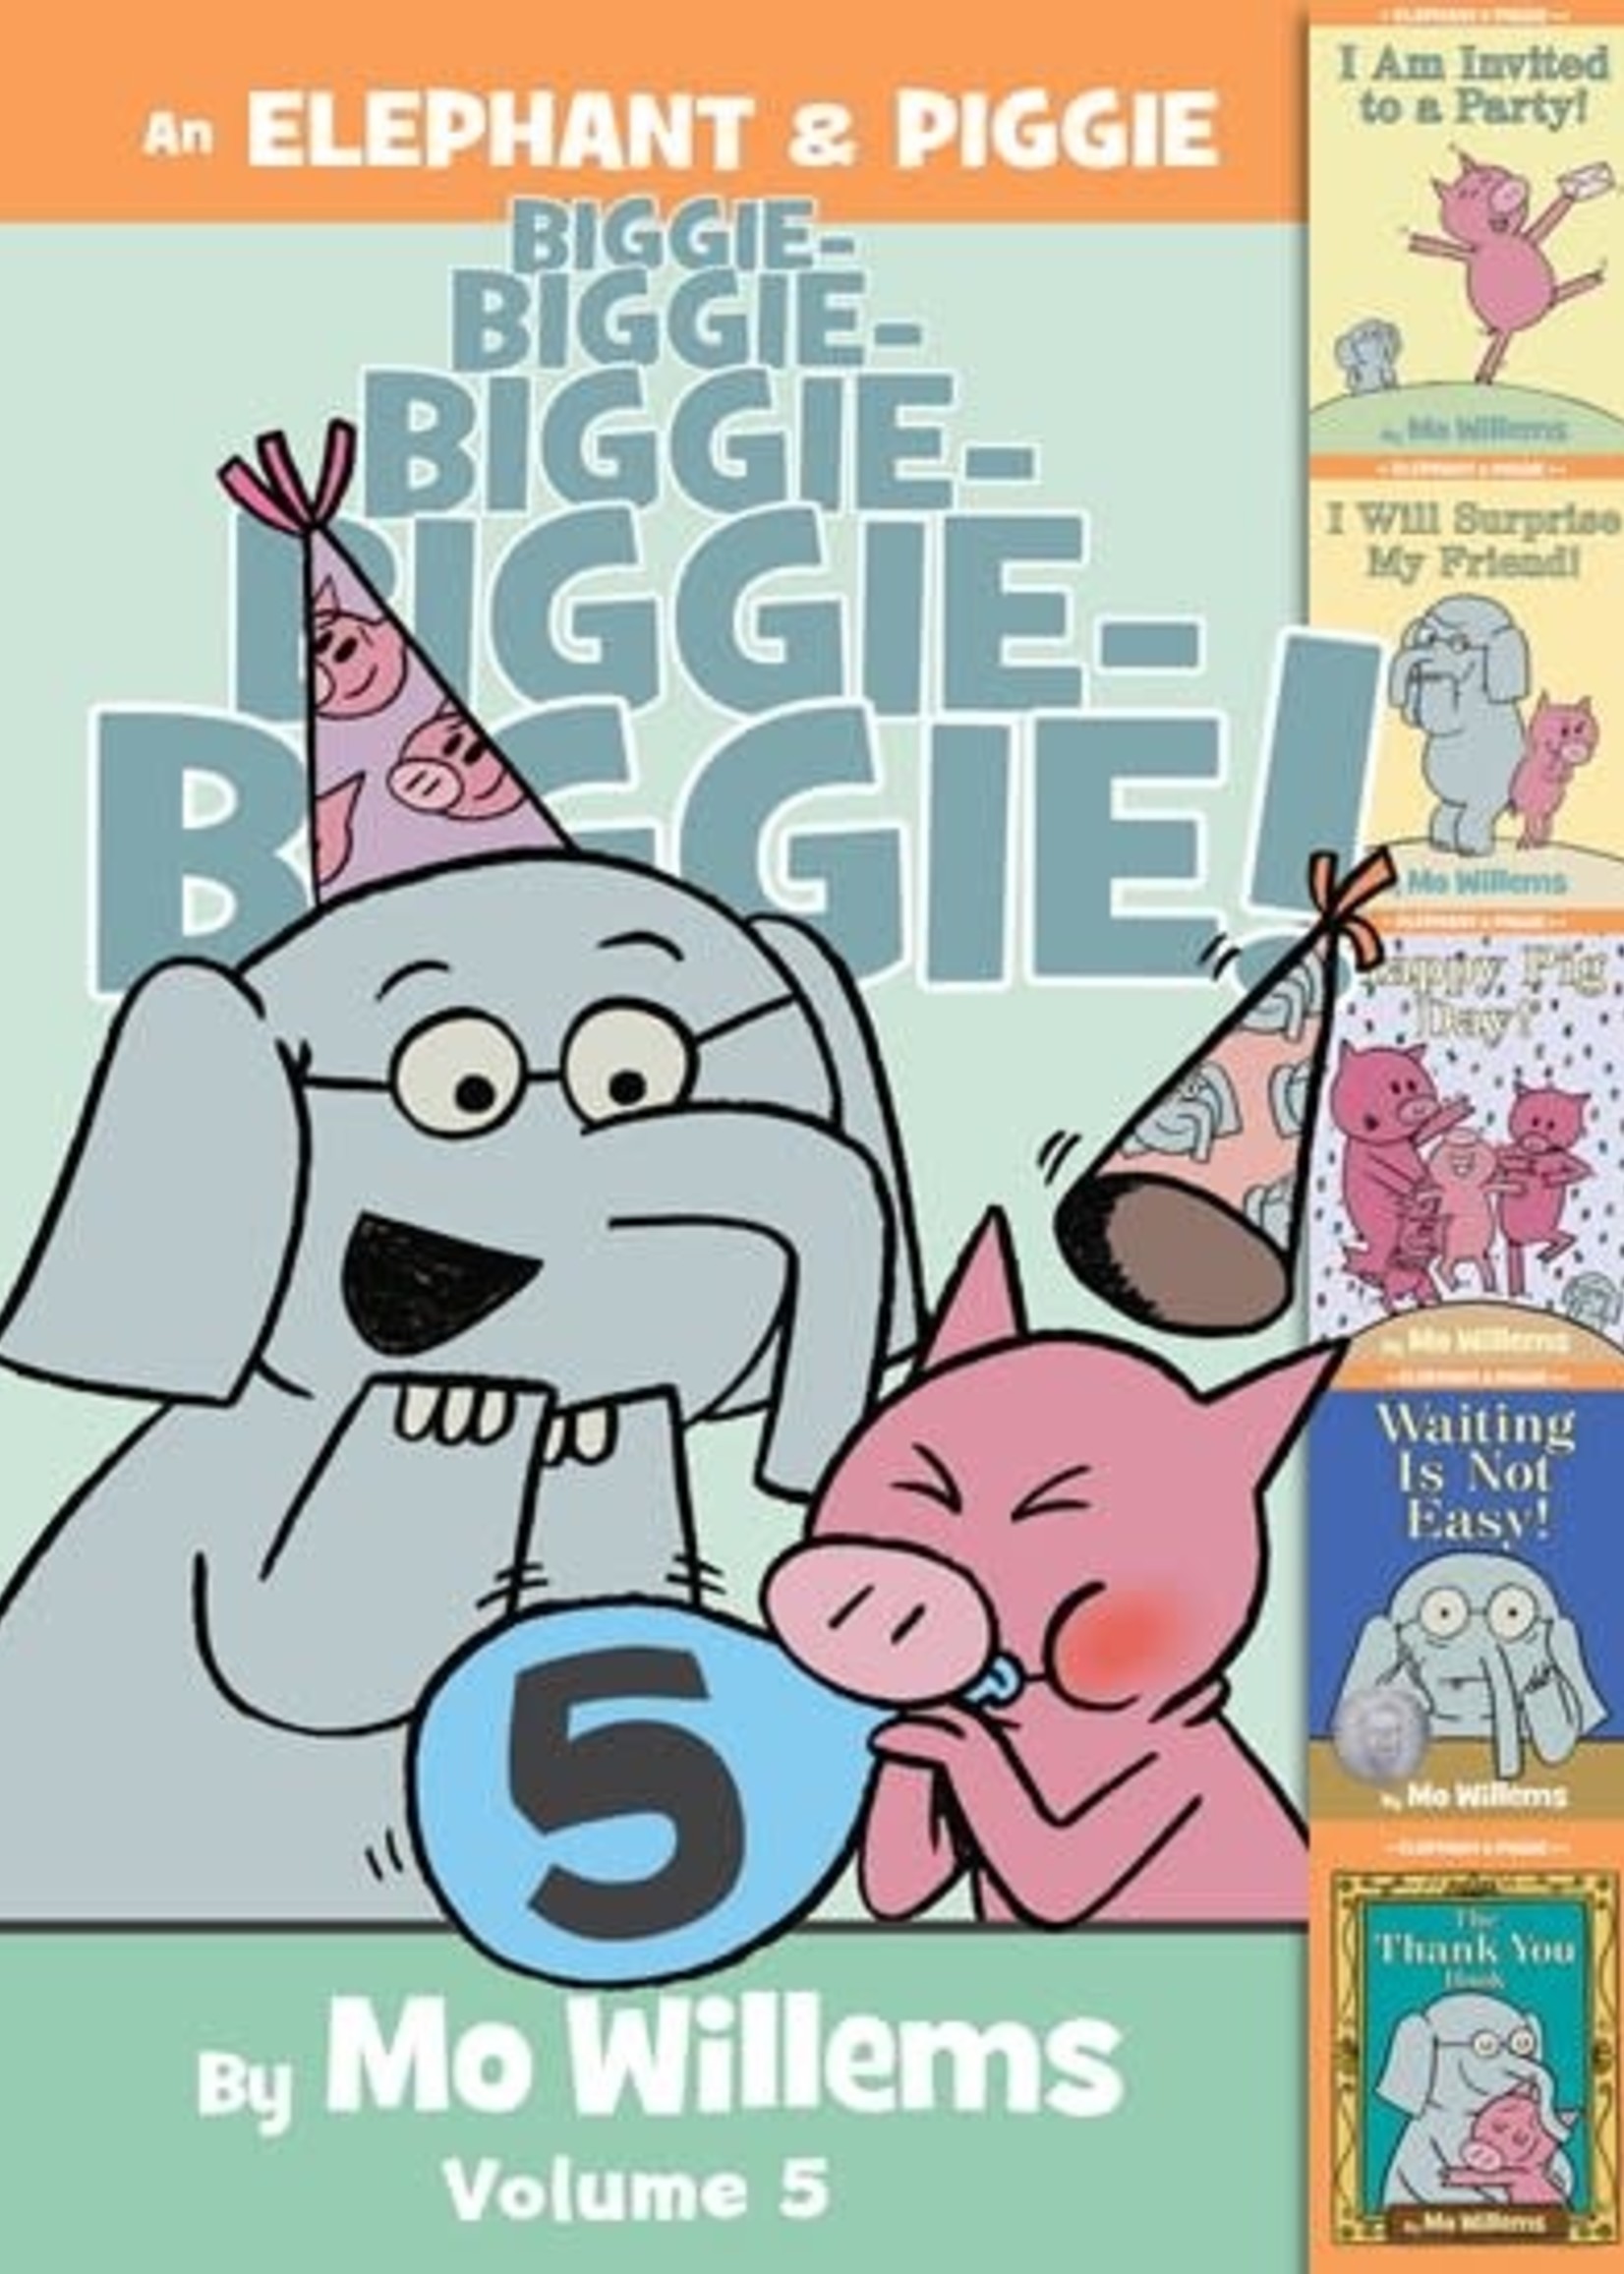 Disney-Hyperion Elephant & Piggie Biggie-Biggie-Biggie! Volume 5